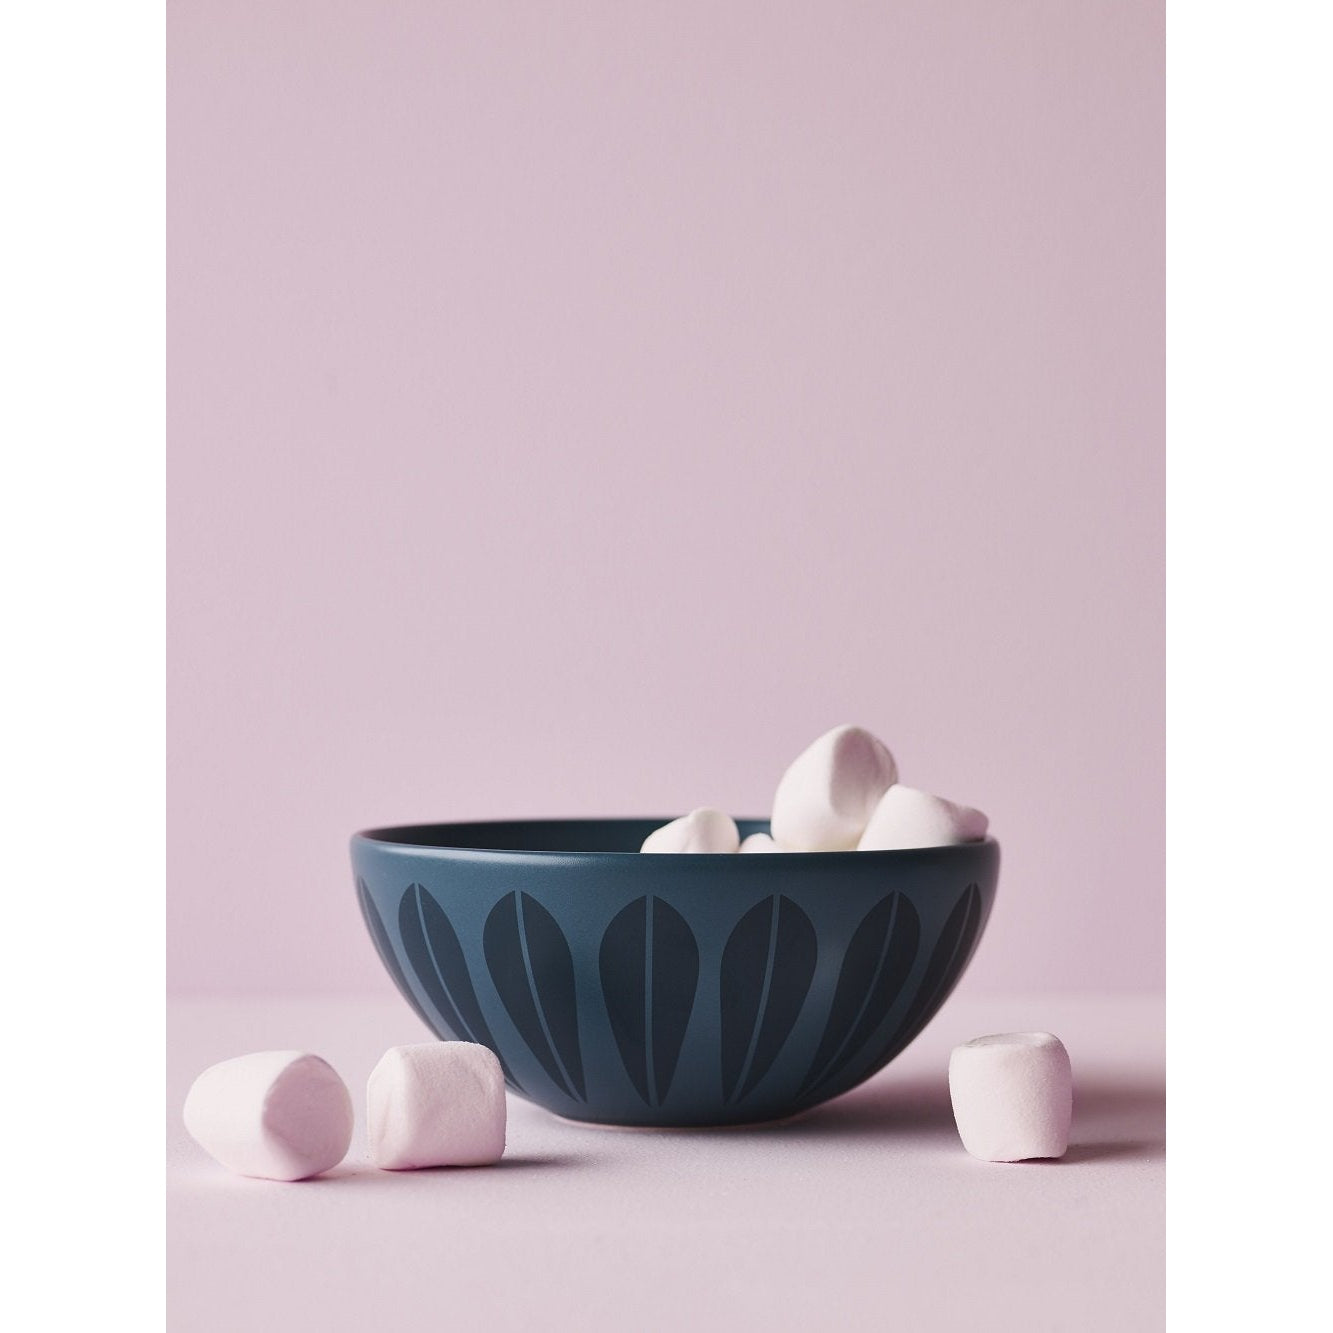 Lucie Kaas Arne Clausen Collection Sugar Bowl, šedá